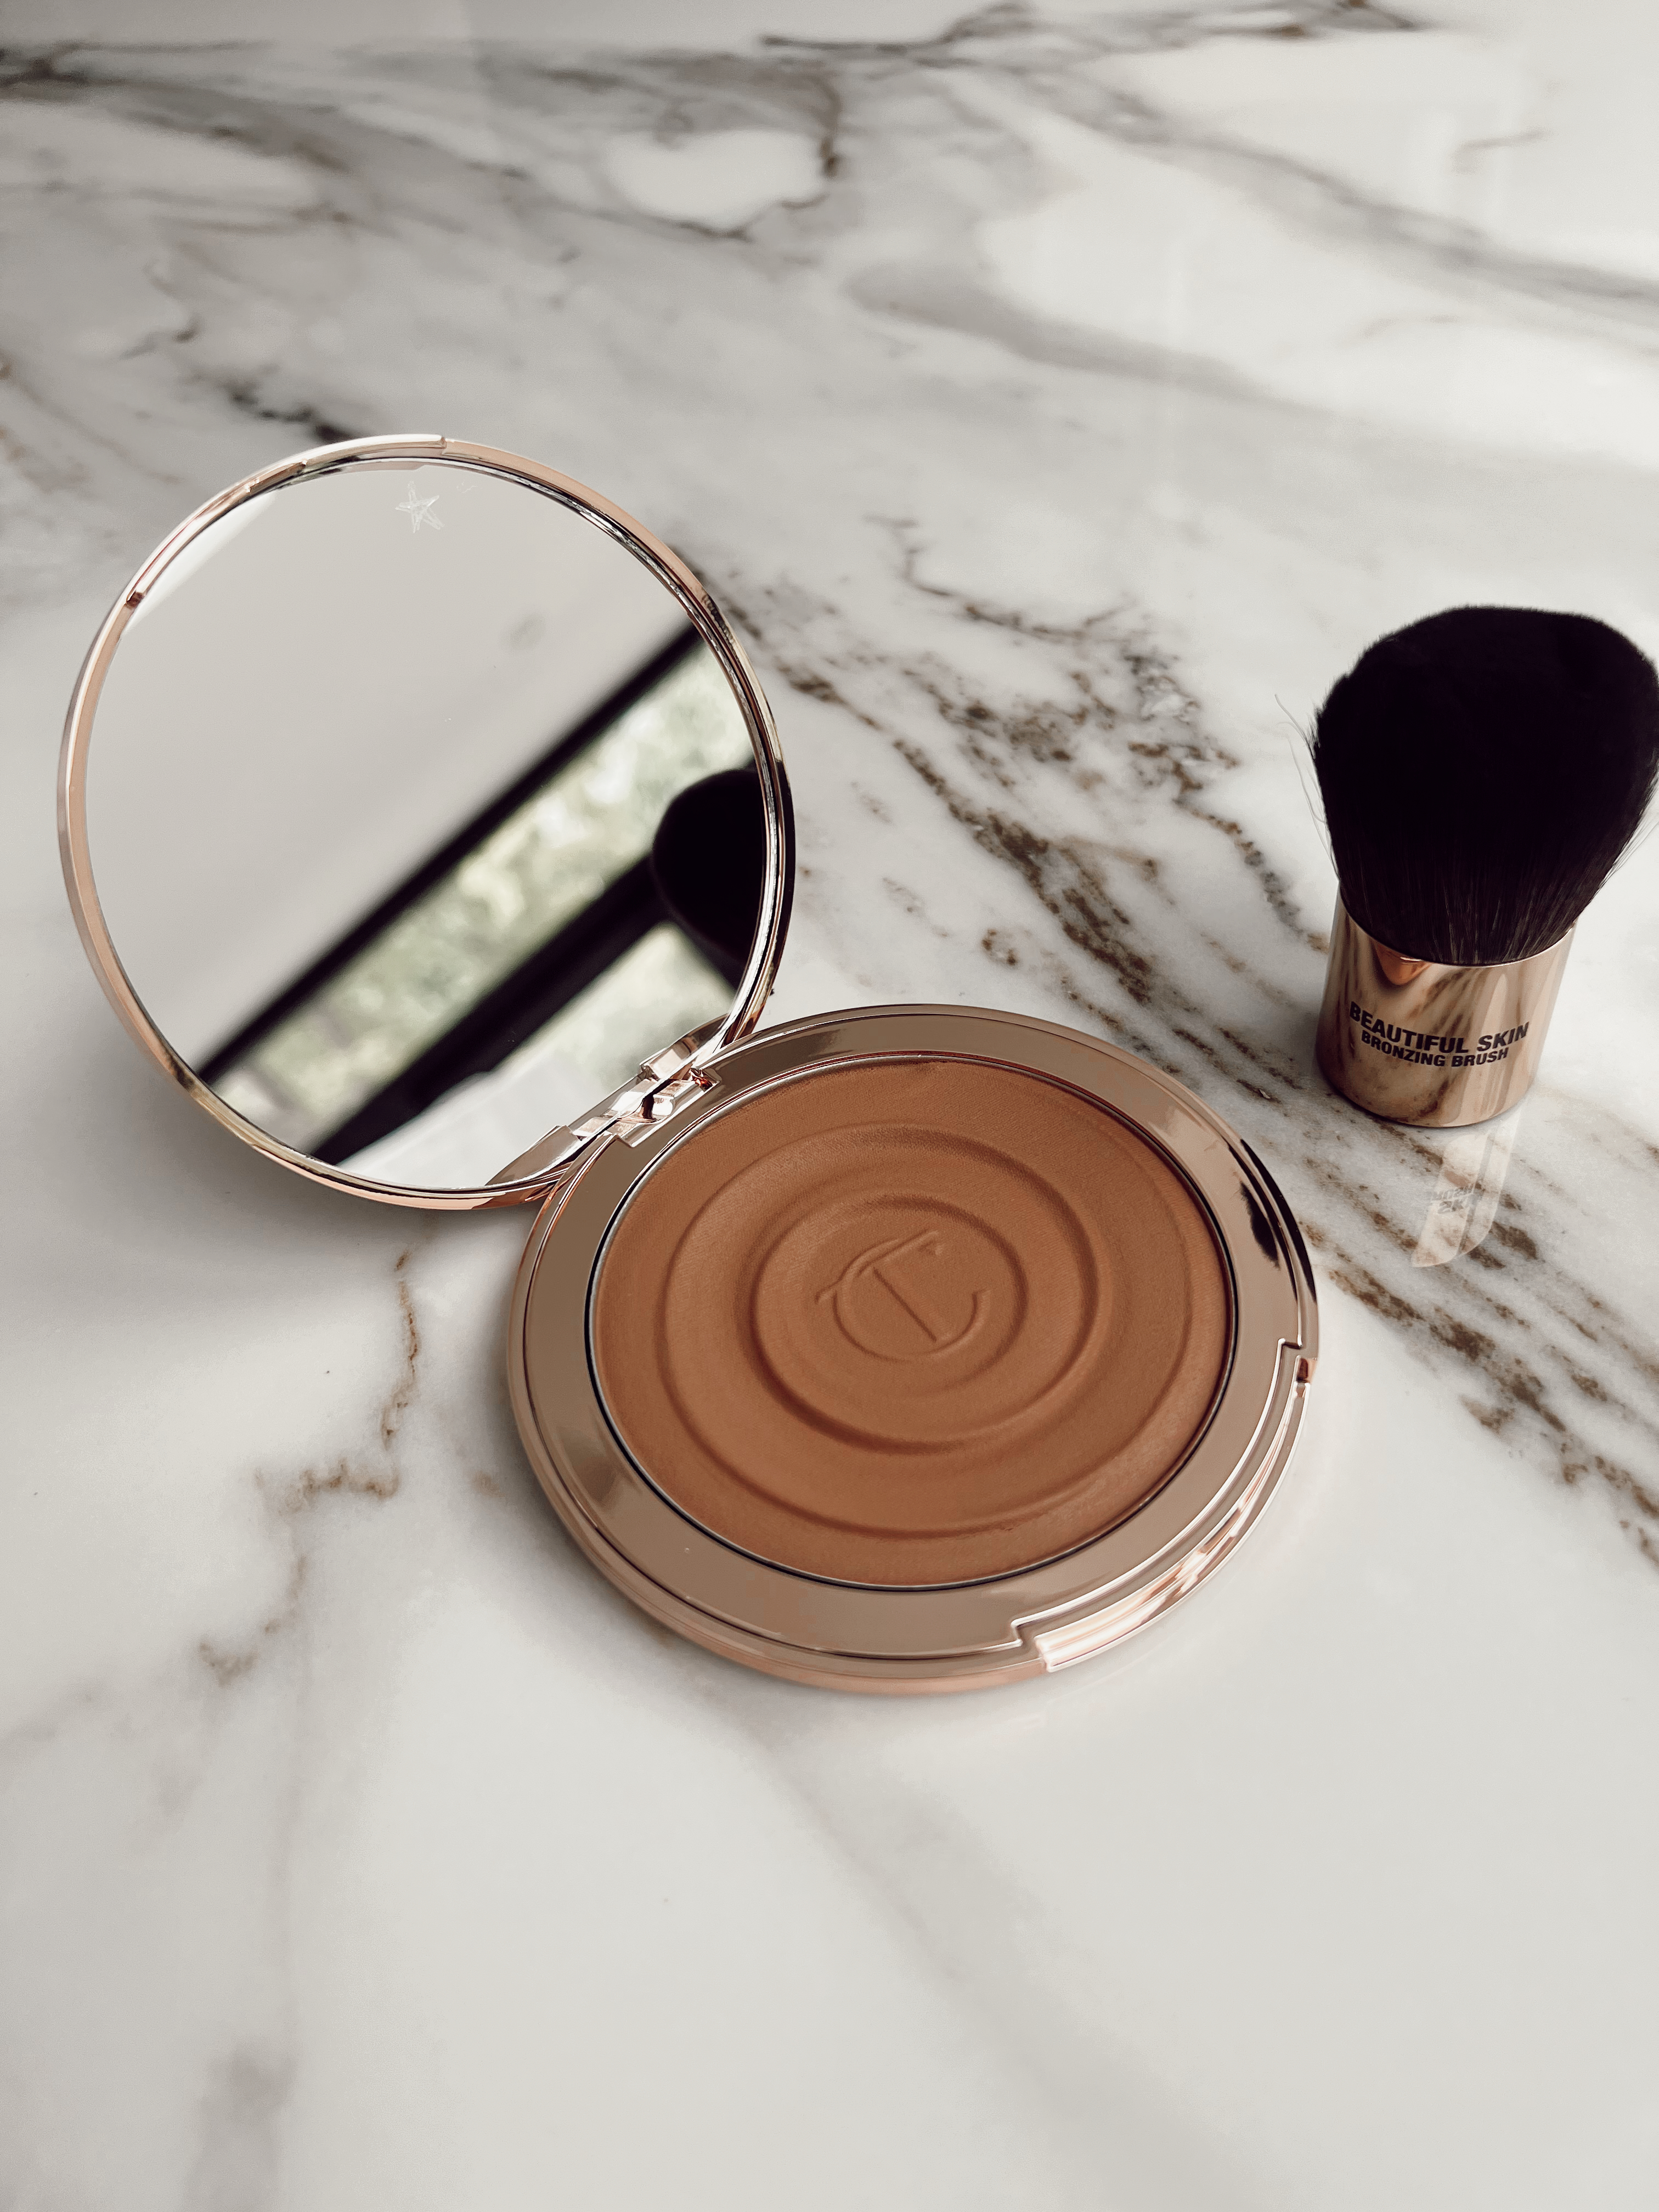 Emtalks: Charlotte Tilbury Beautiful Skin Sun-Kissed Glow Bronzer Review